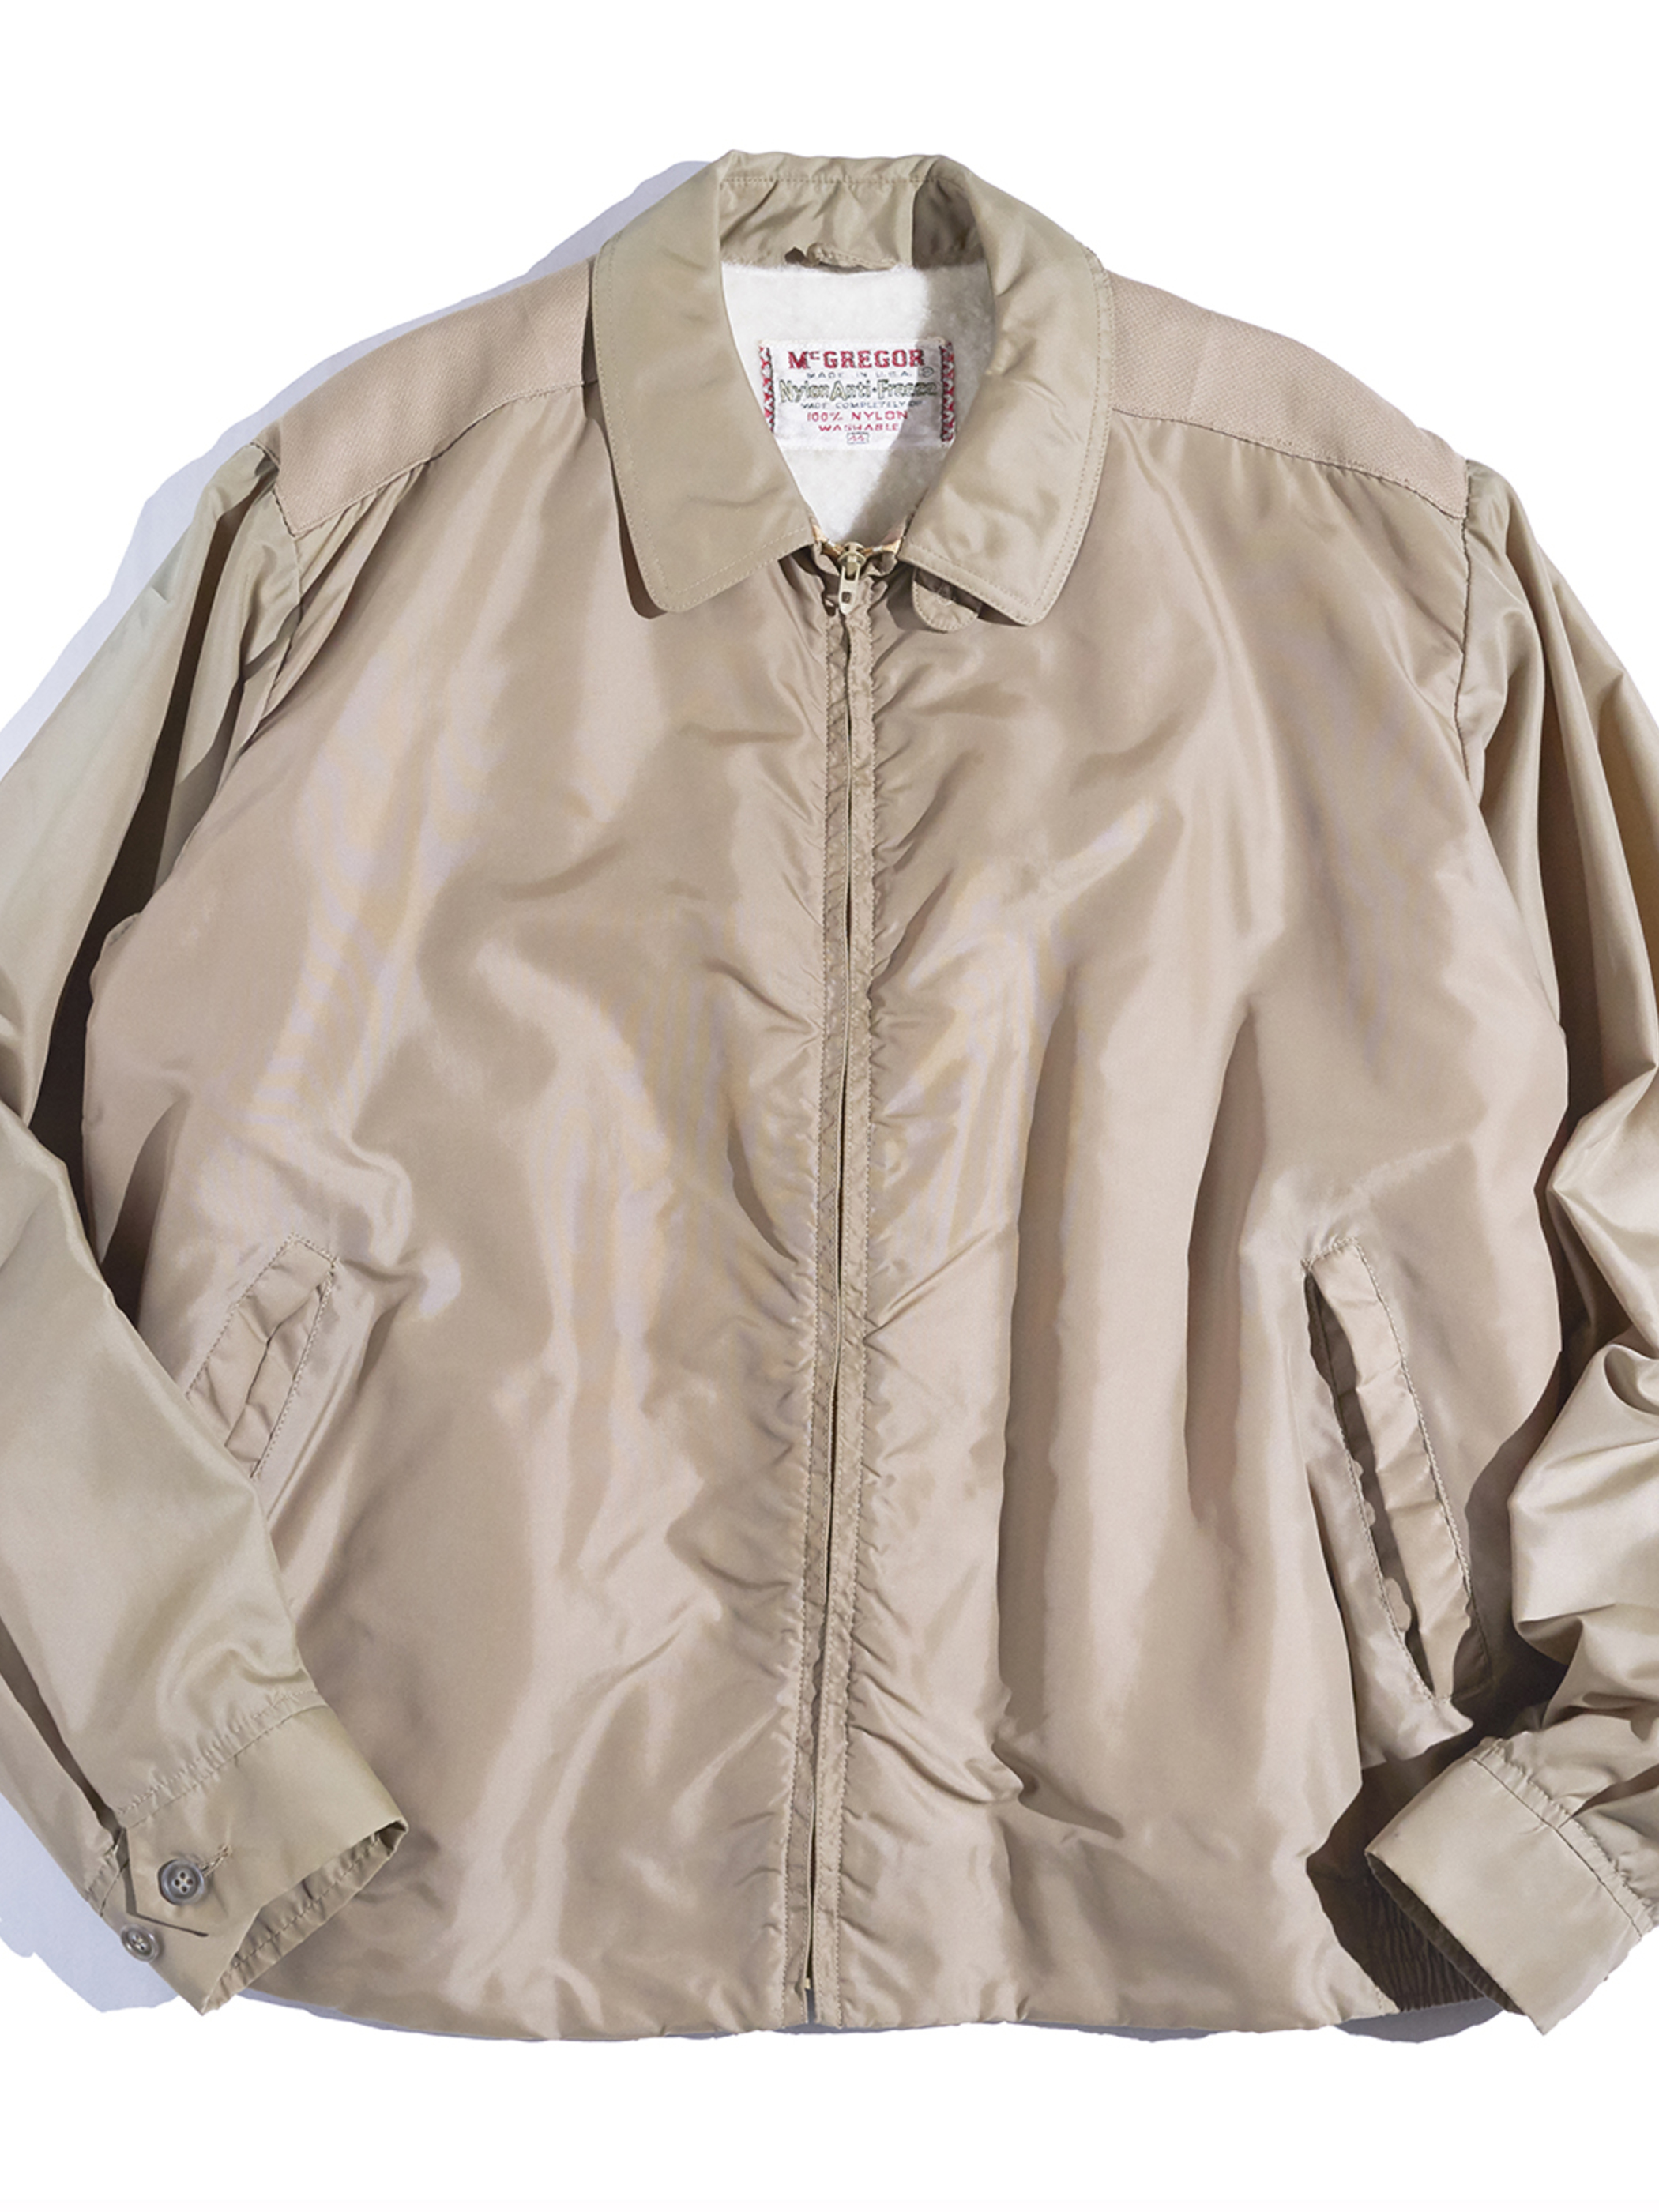 HAg-Le 1960s quot;McGREGORquot; nylon anti freeze jacket -BEIGE-